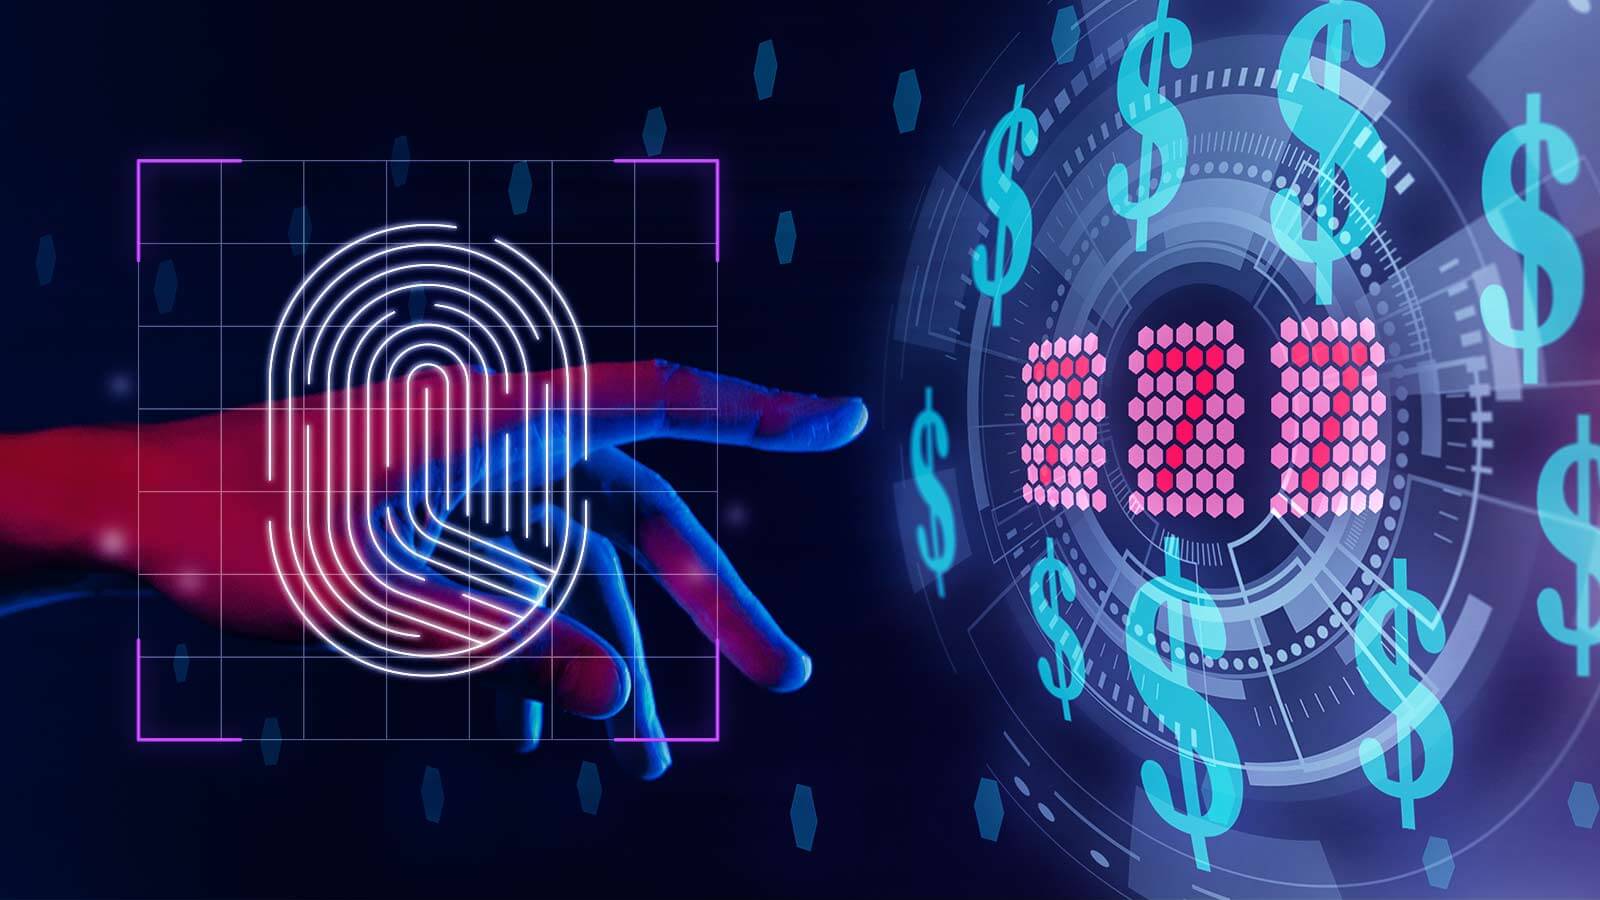 Digital Casino Security at Your Fingerprint